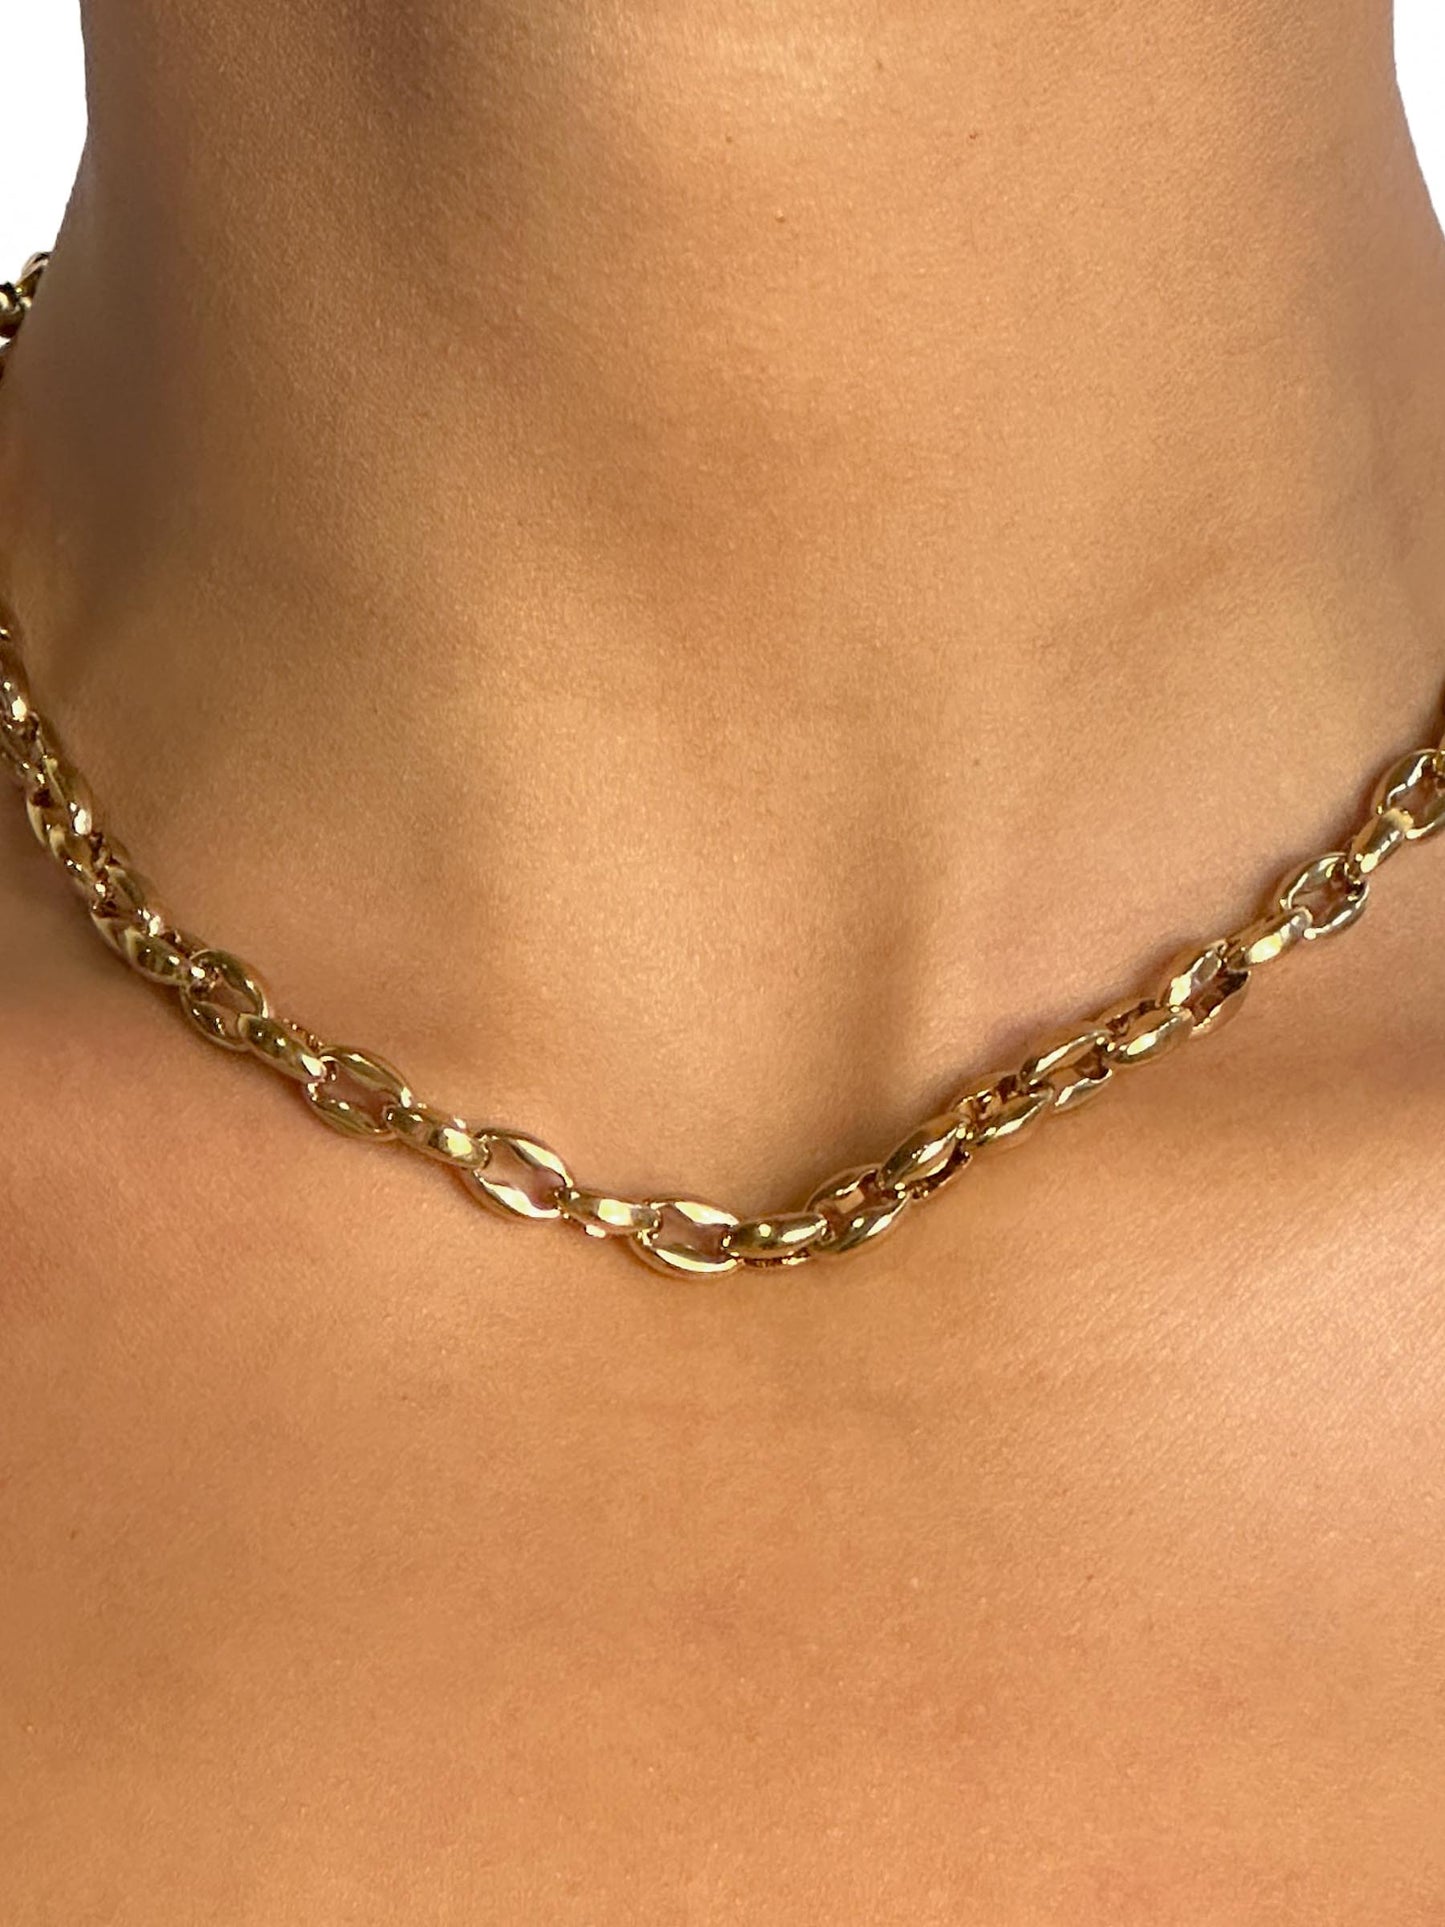 Jinx gold chain